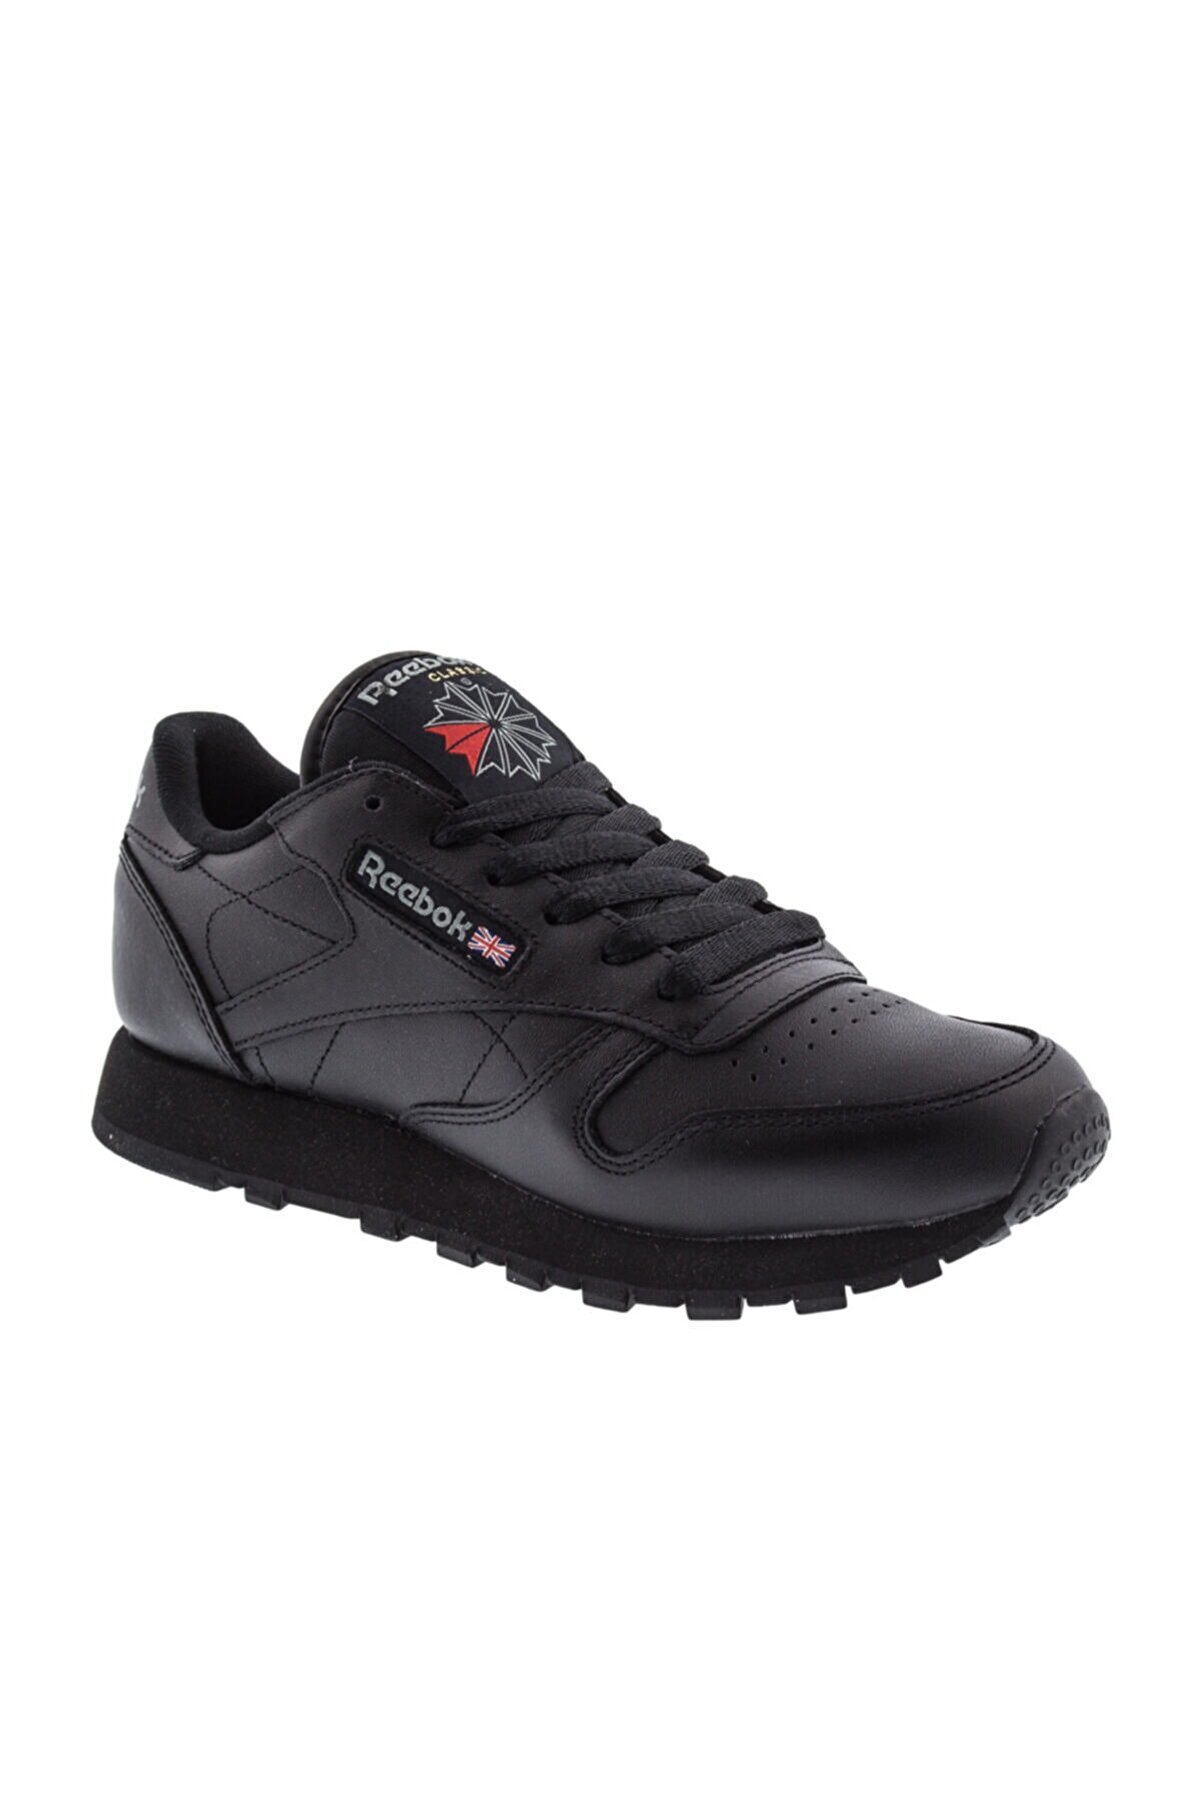 Reebok R003912 CLASSIC LEATHER B Siyah Kadın Sneaker 100018531